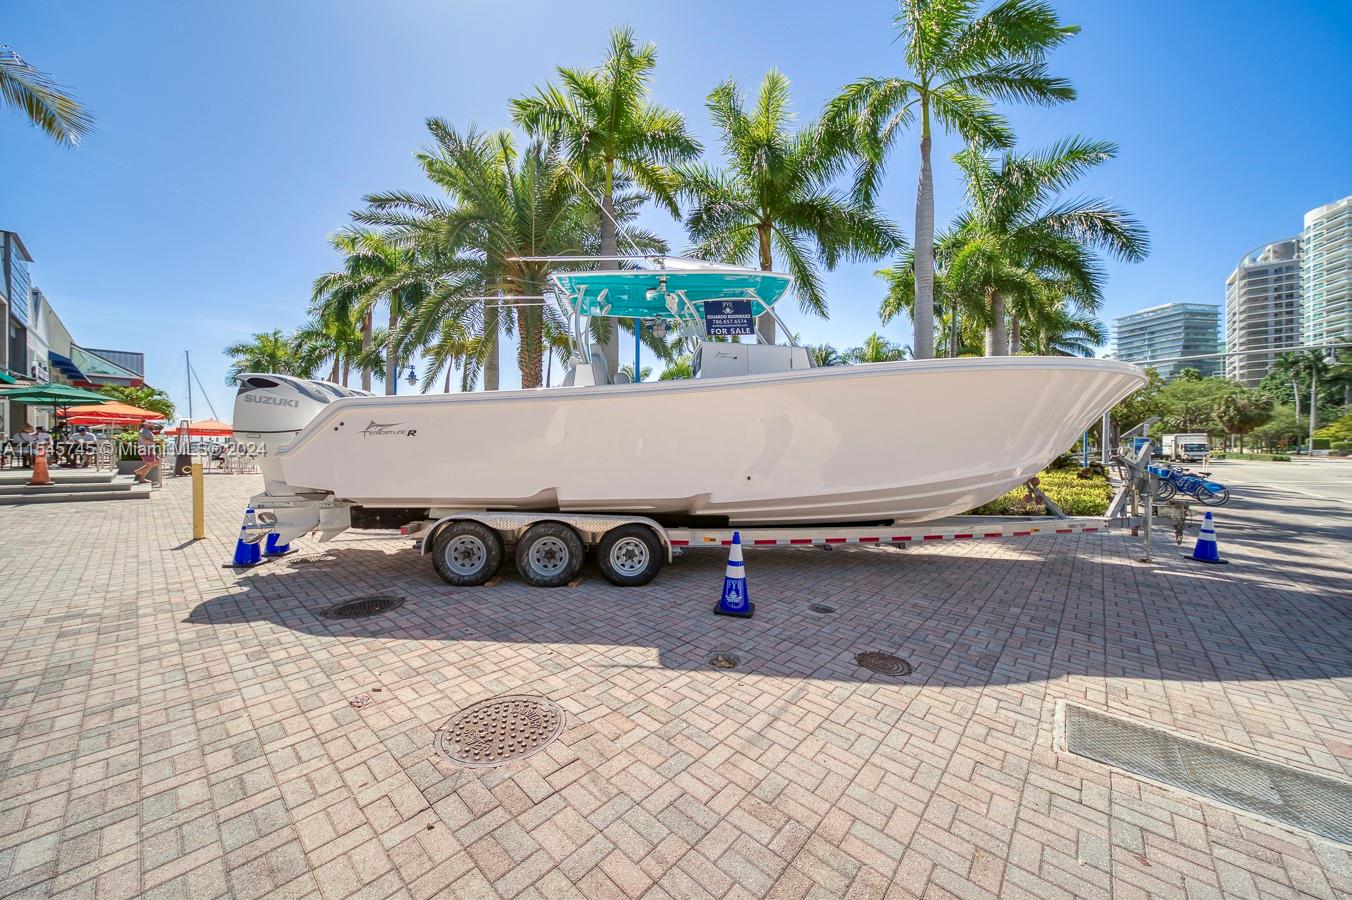 Boat Manufacturing Business For Sale in Miami, Opa-Locka, FL 33054